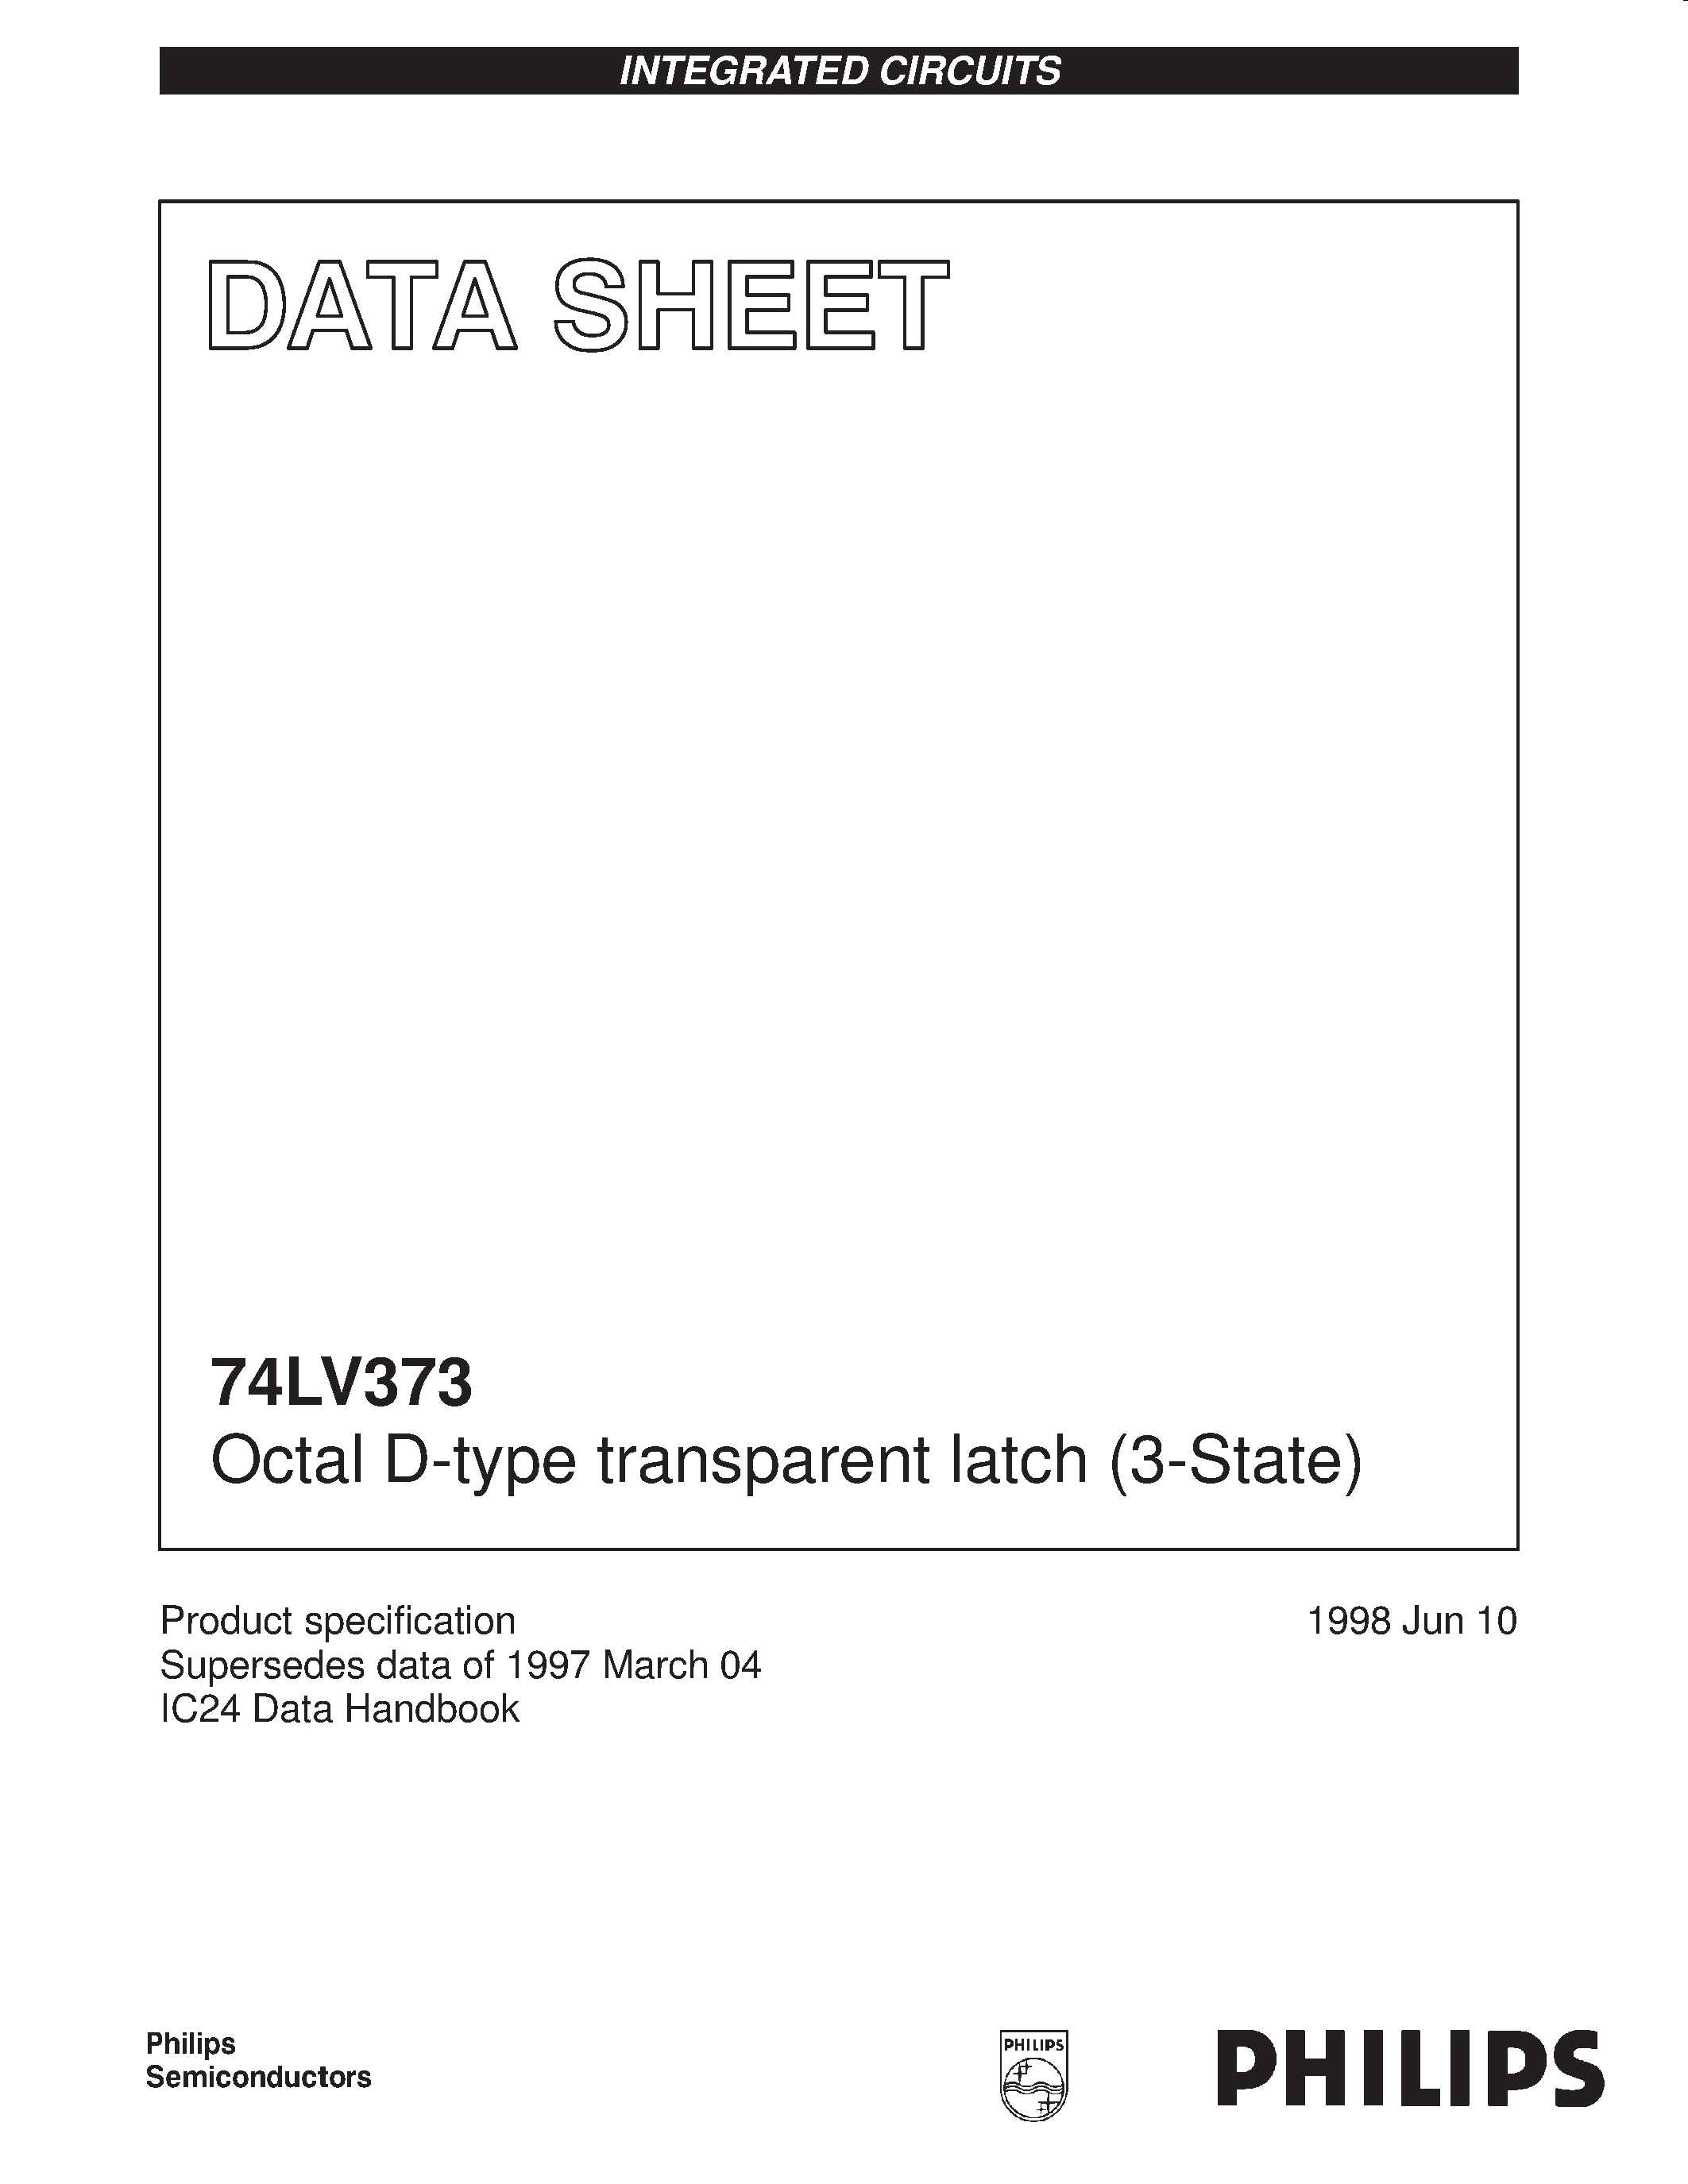 Даташит 74LV373 - Octal D-type transparent latch 3-State страница 1